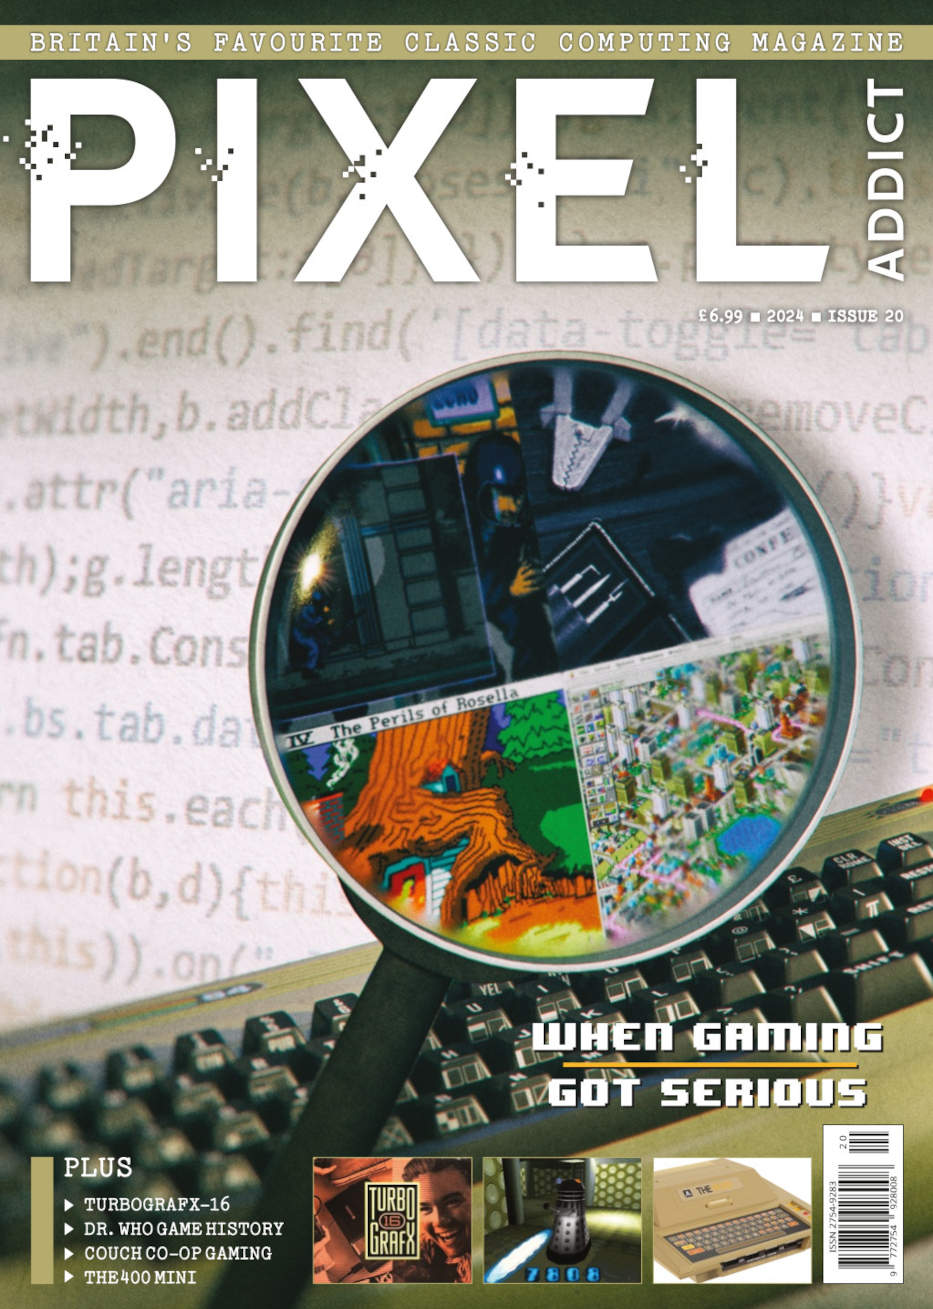 Pixel Addict classic computing and digital culture lifestyle magazine.